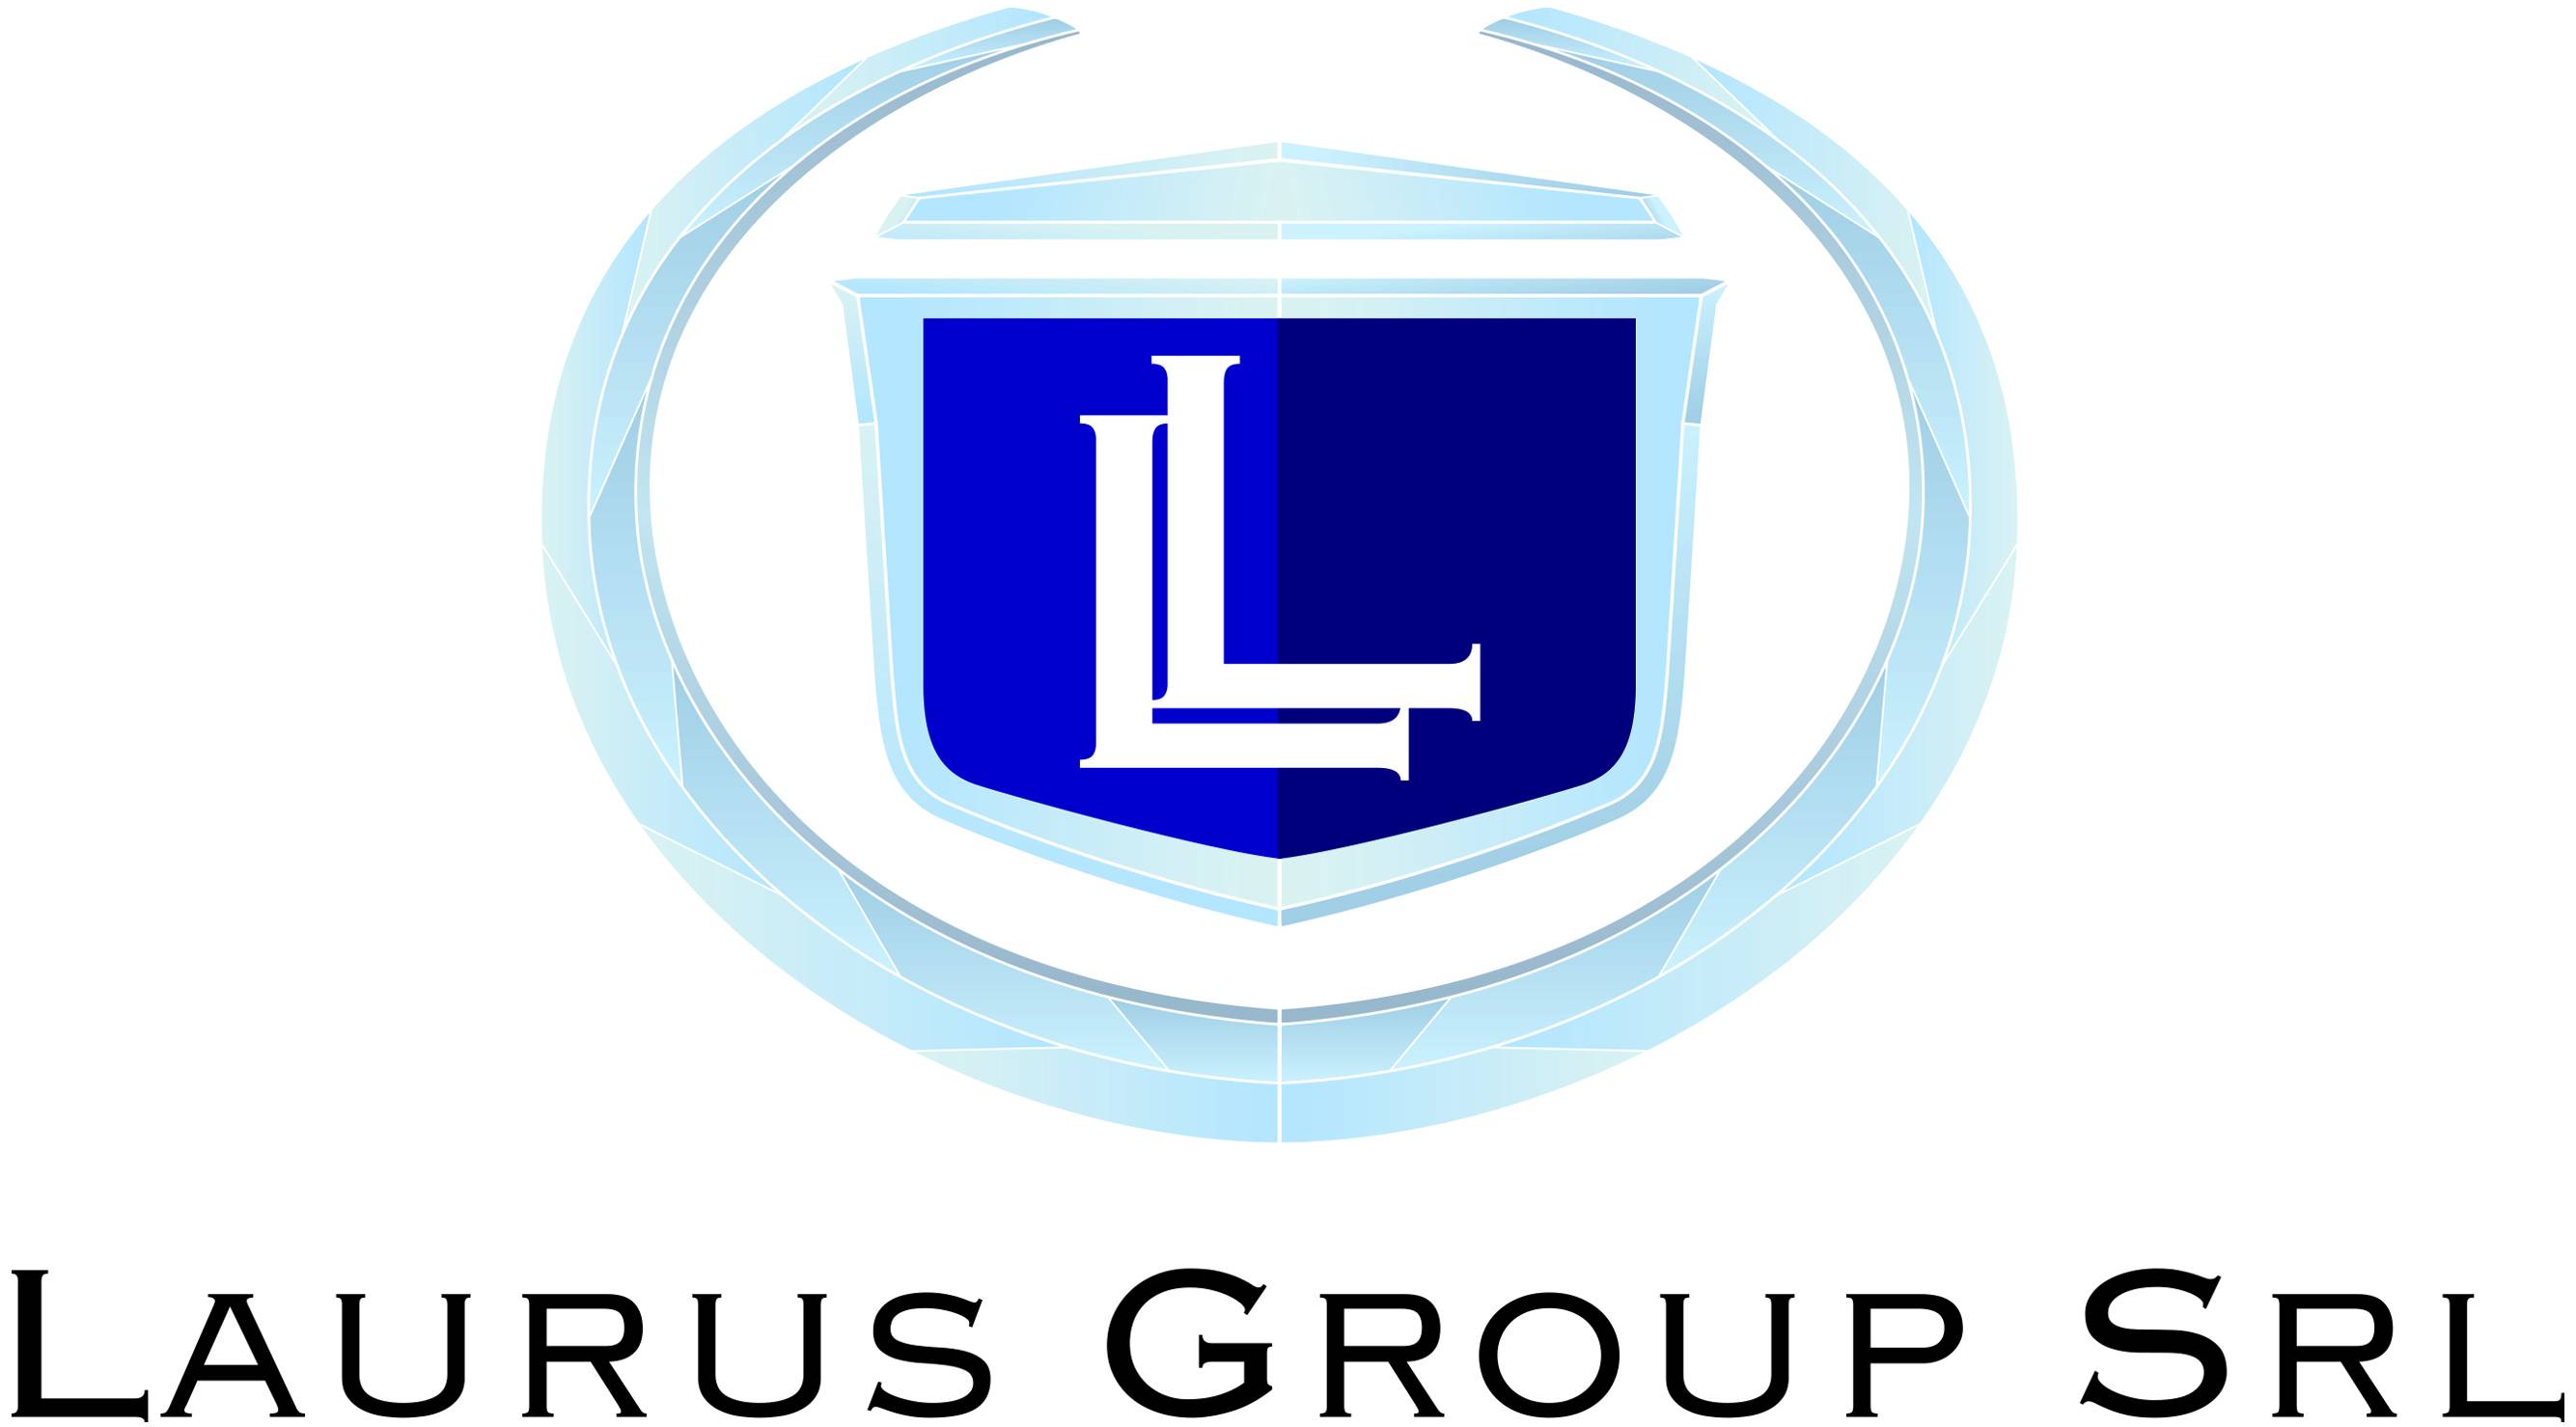 LAURUS GROUP S.R.L.